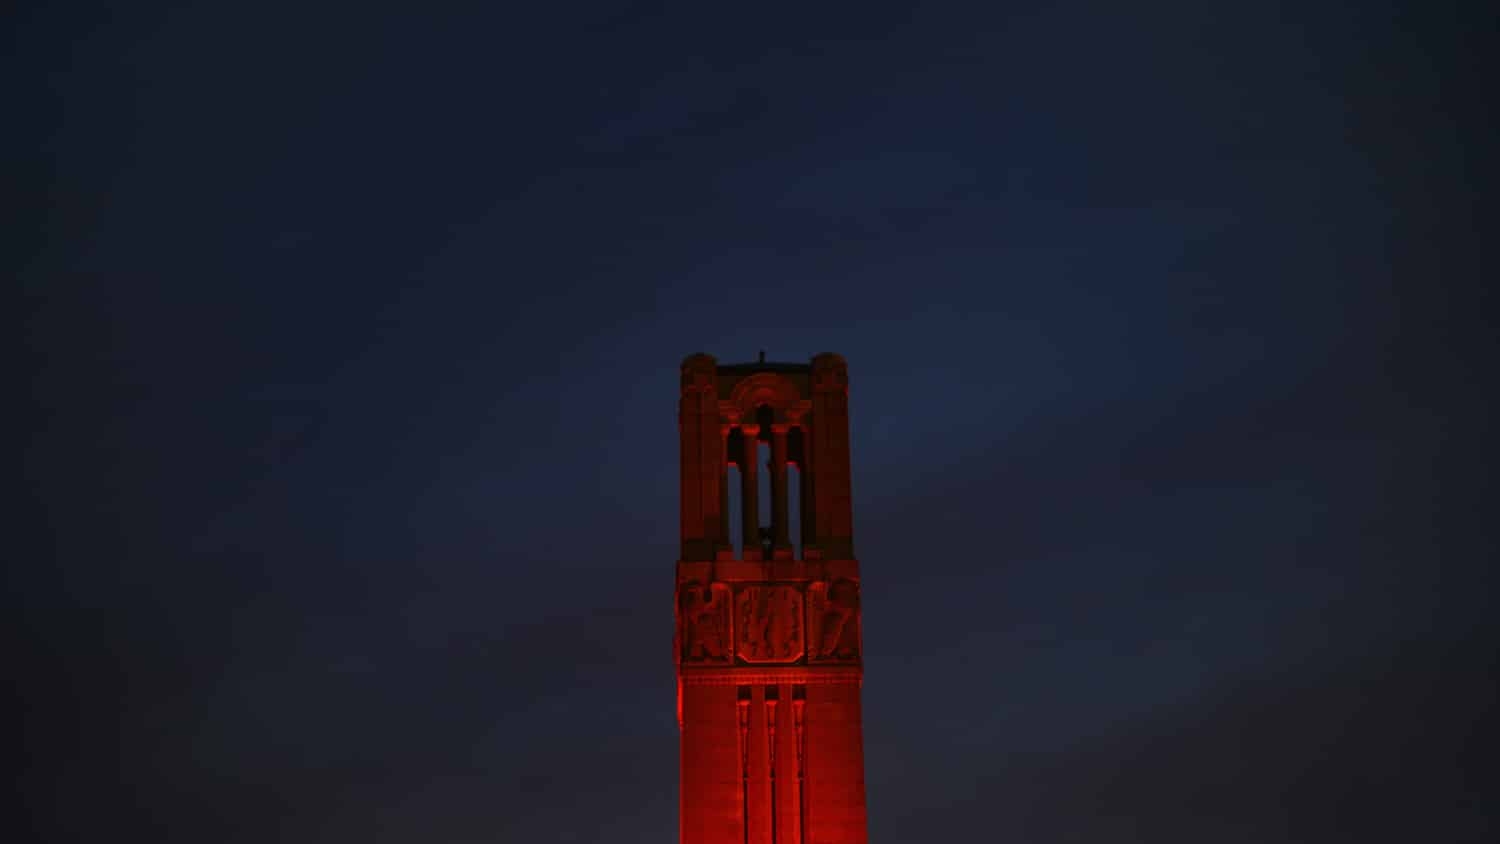 Belltower lit red against a night sky